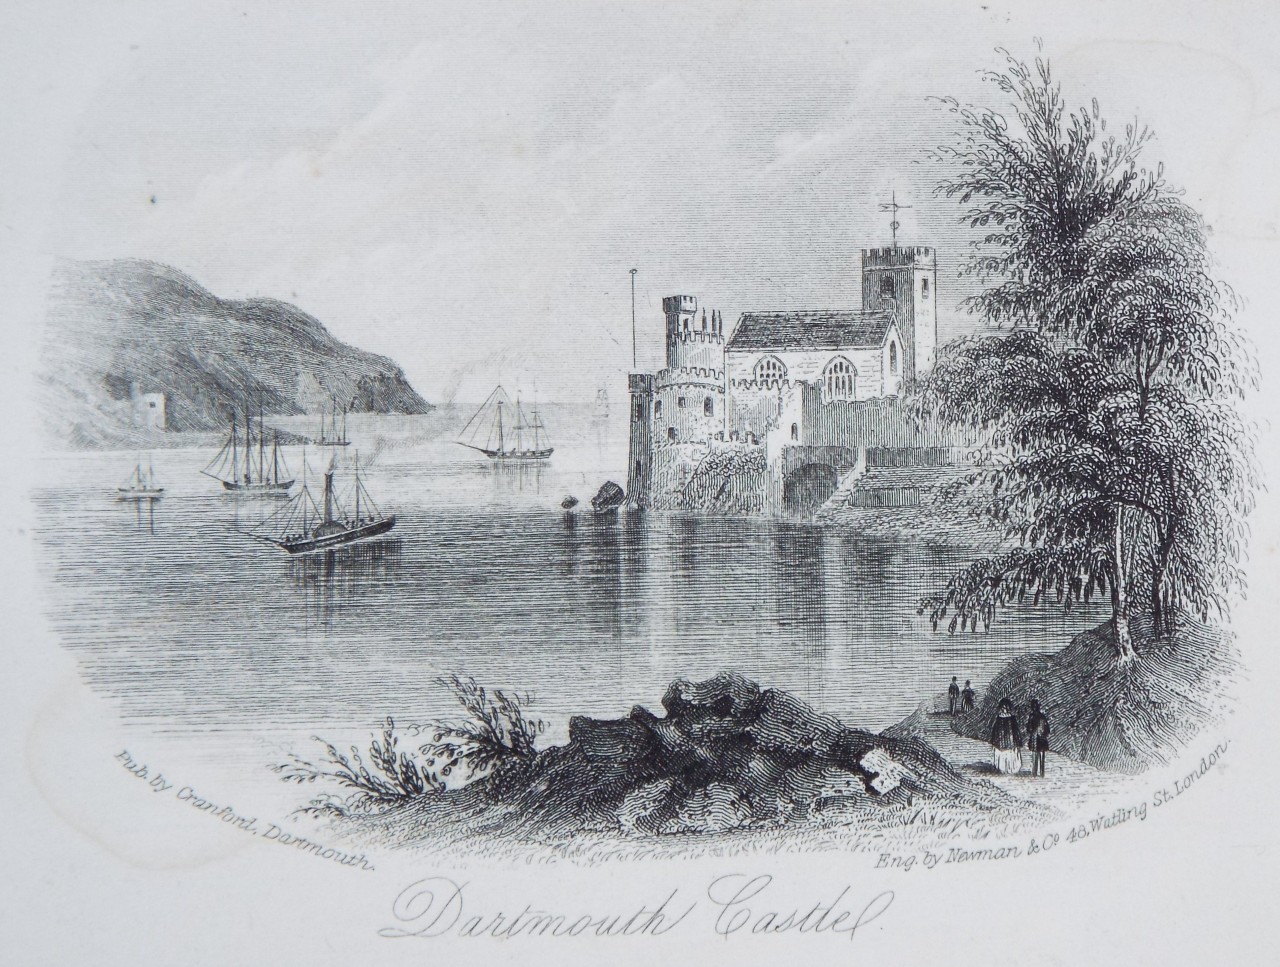 Steel Vignette - Dartmouth Castle. - Newman